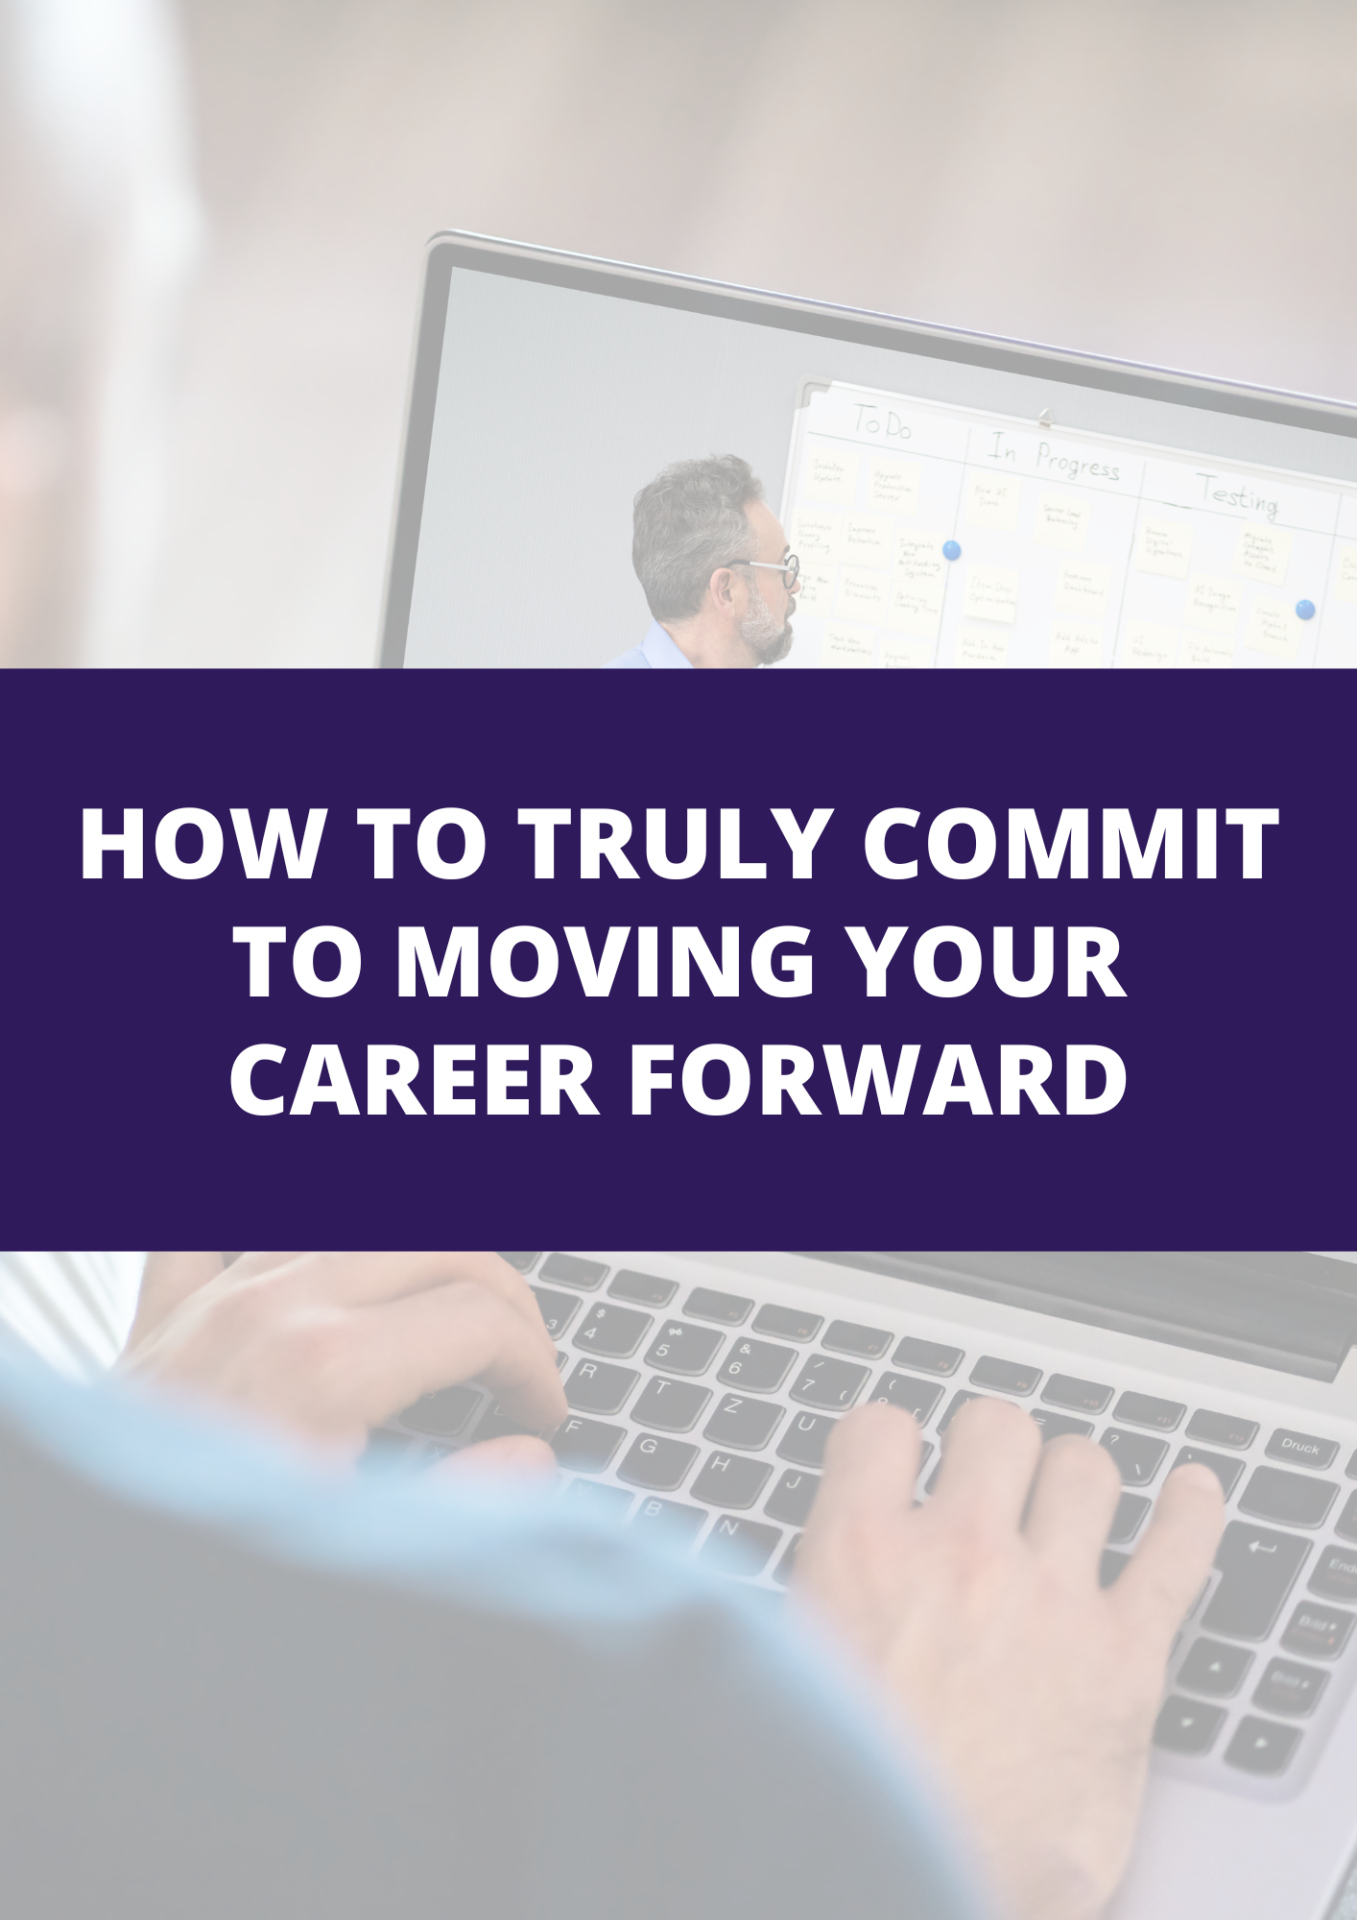 Moving career forward